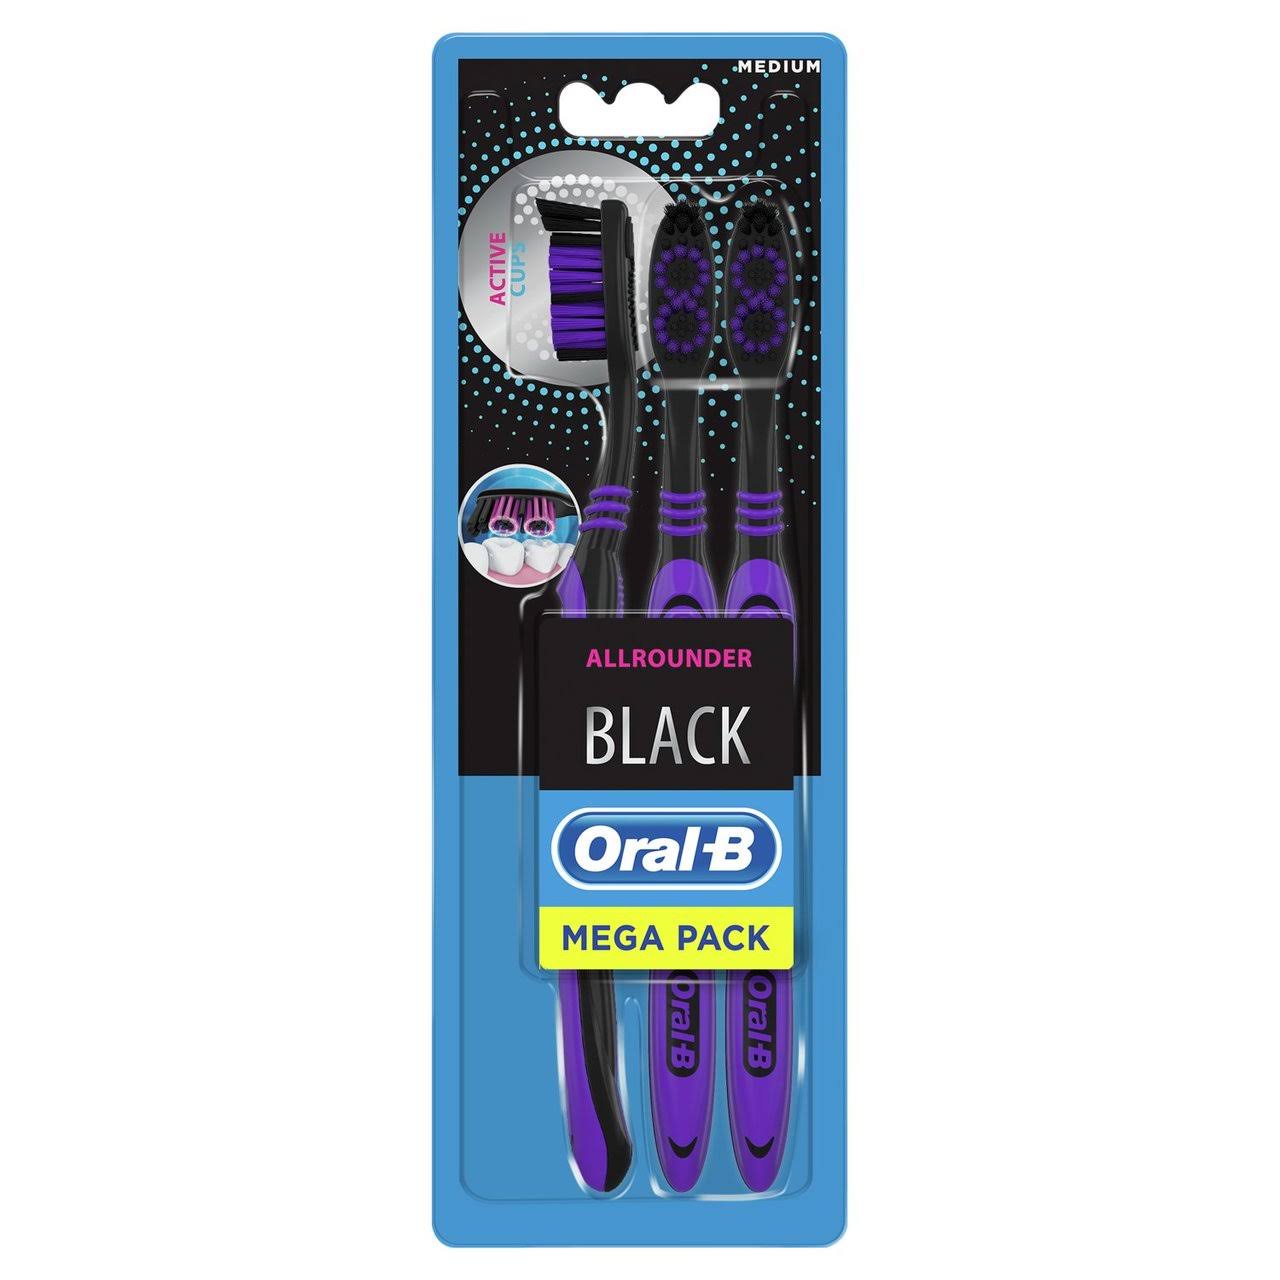 Oral B Allrounder Black Manual Toothbrush - Medium, 3pk